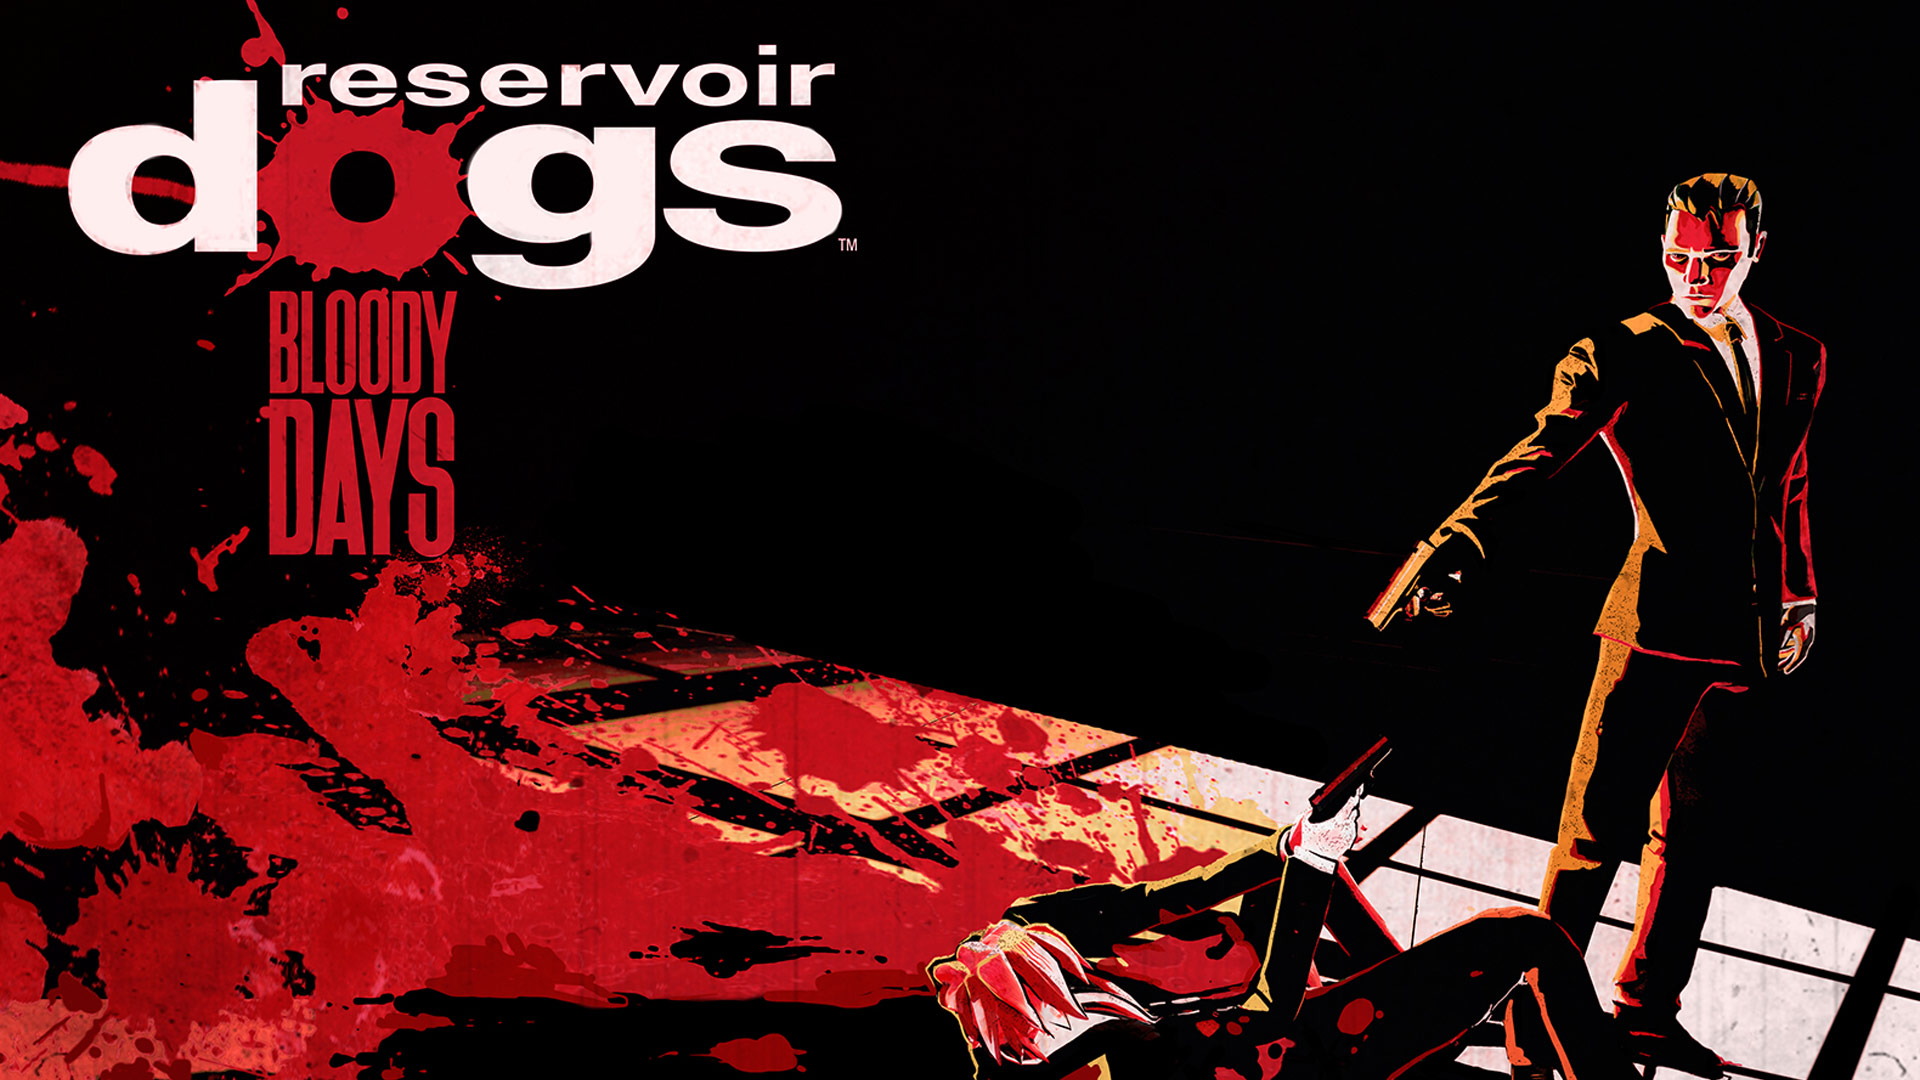 Reservoir Dogs Bloody Days Title Art